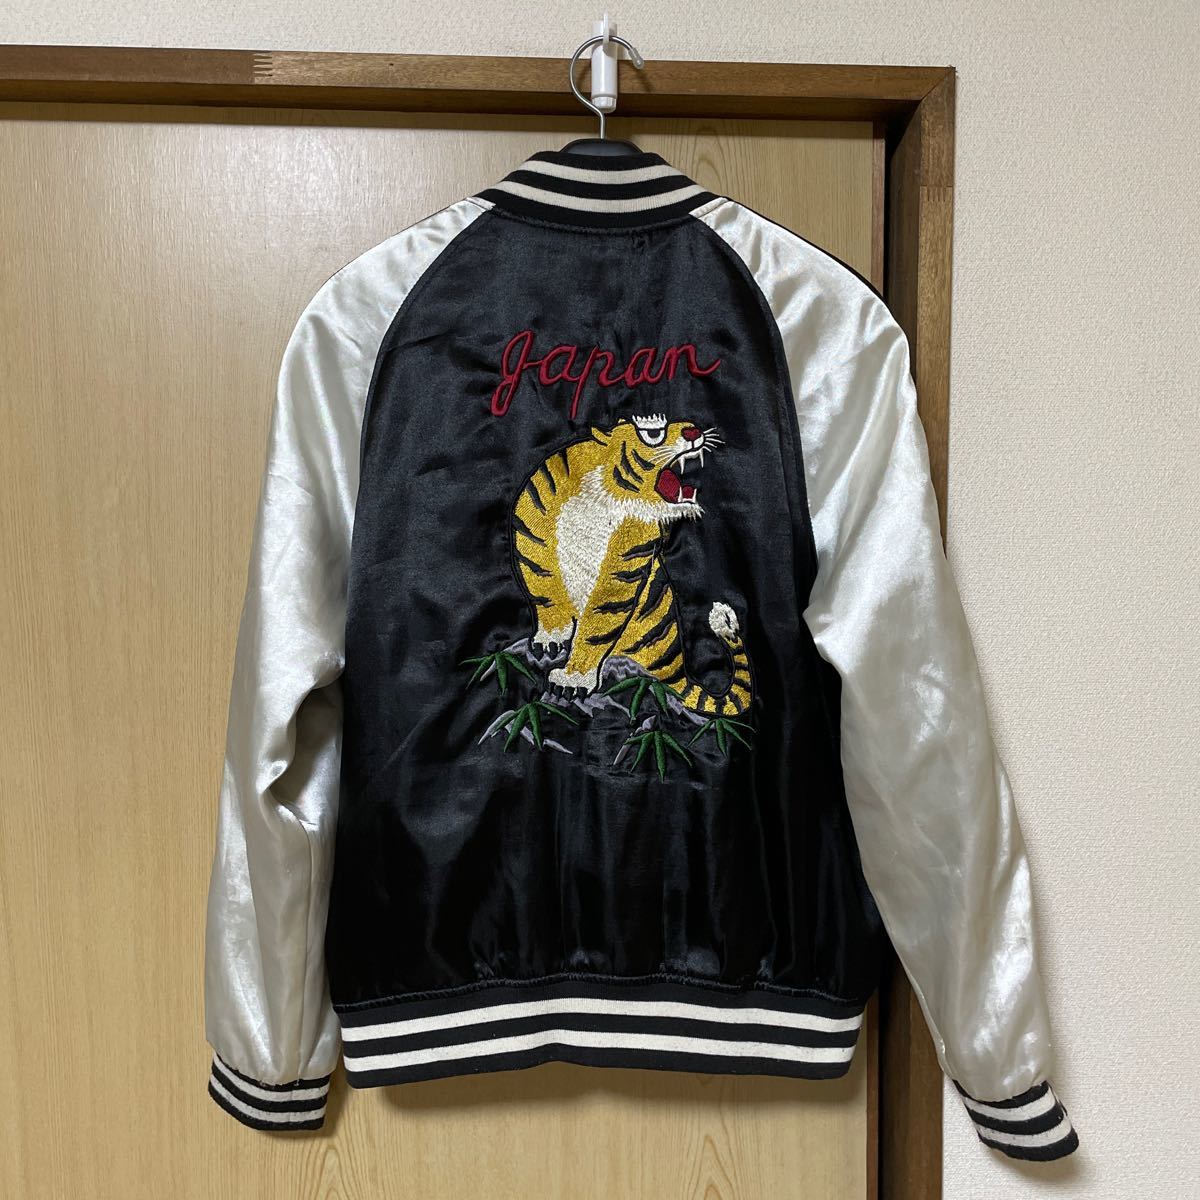  Japanese sovenir jacket M размер 